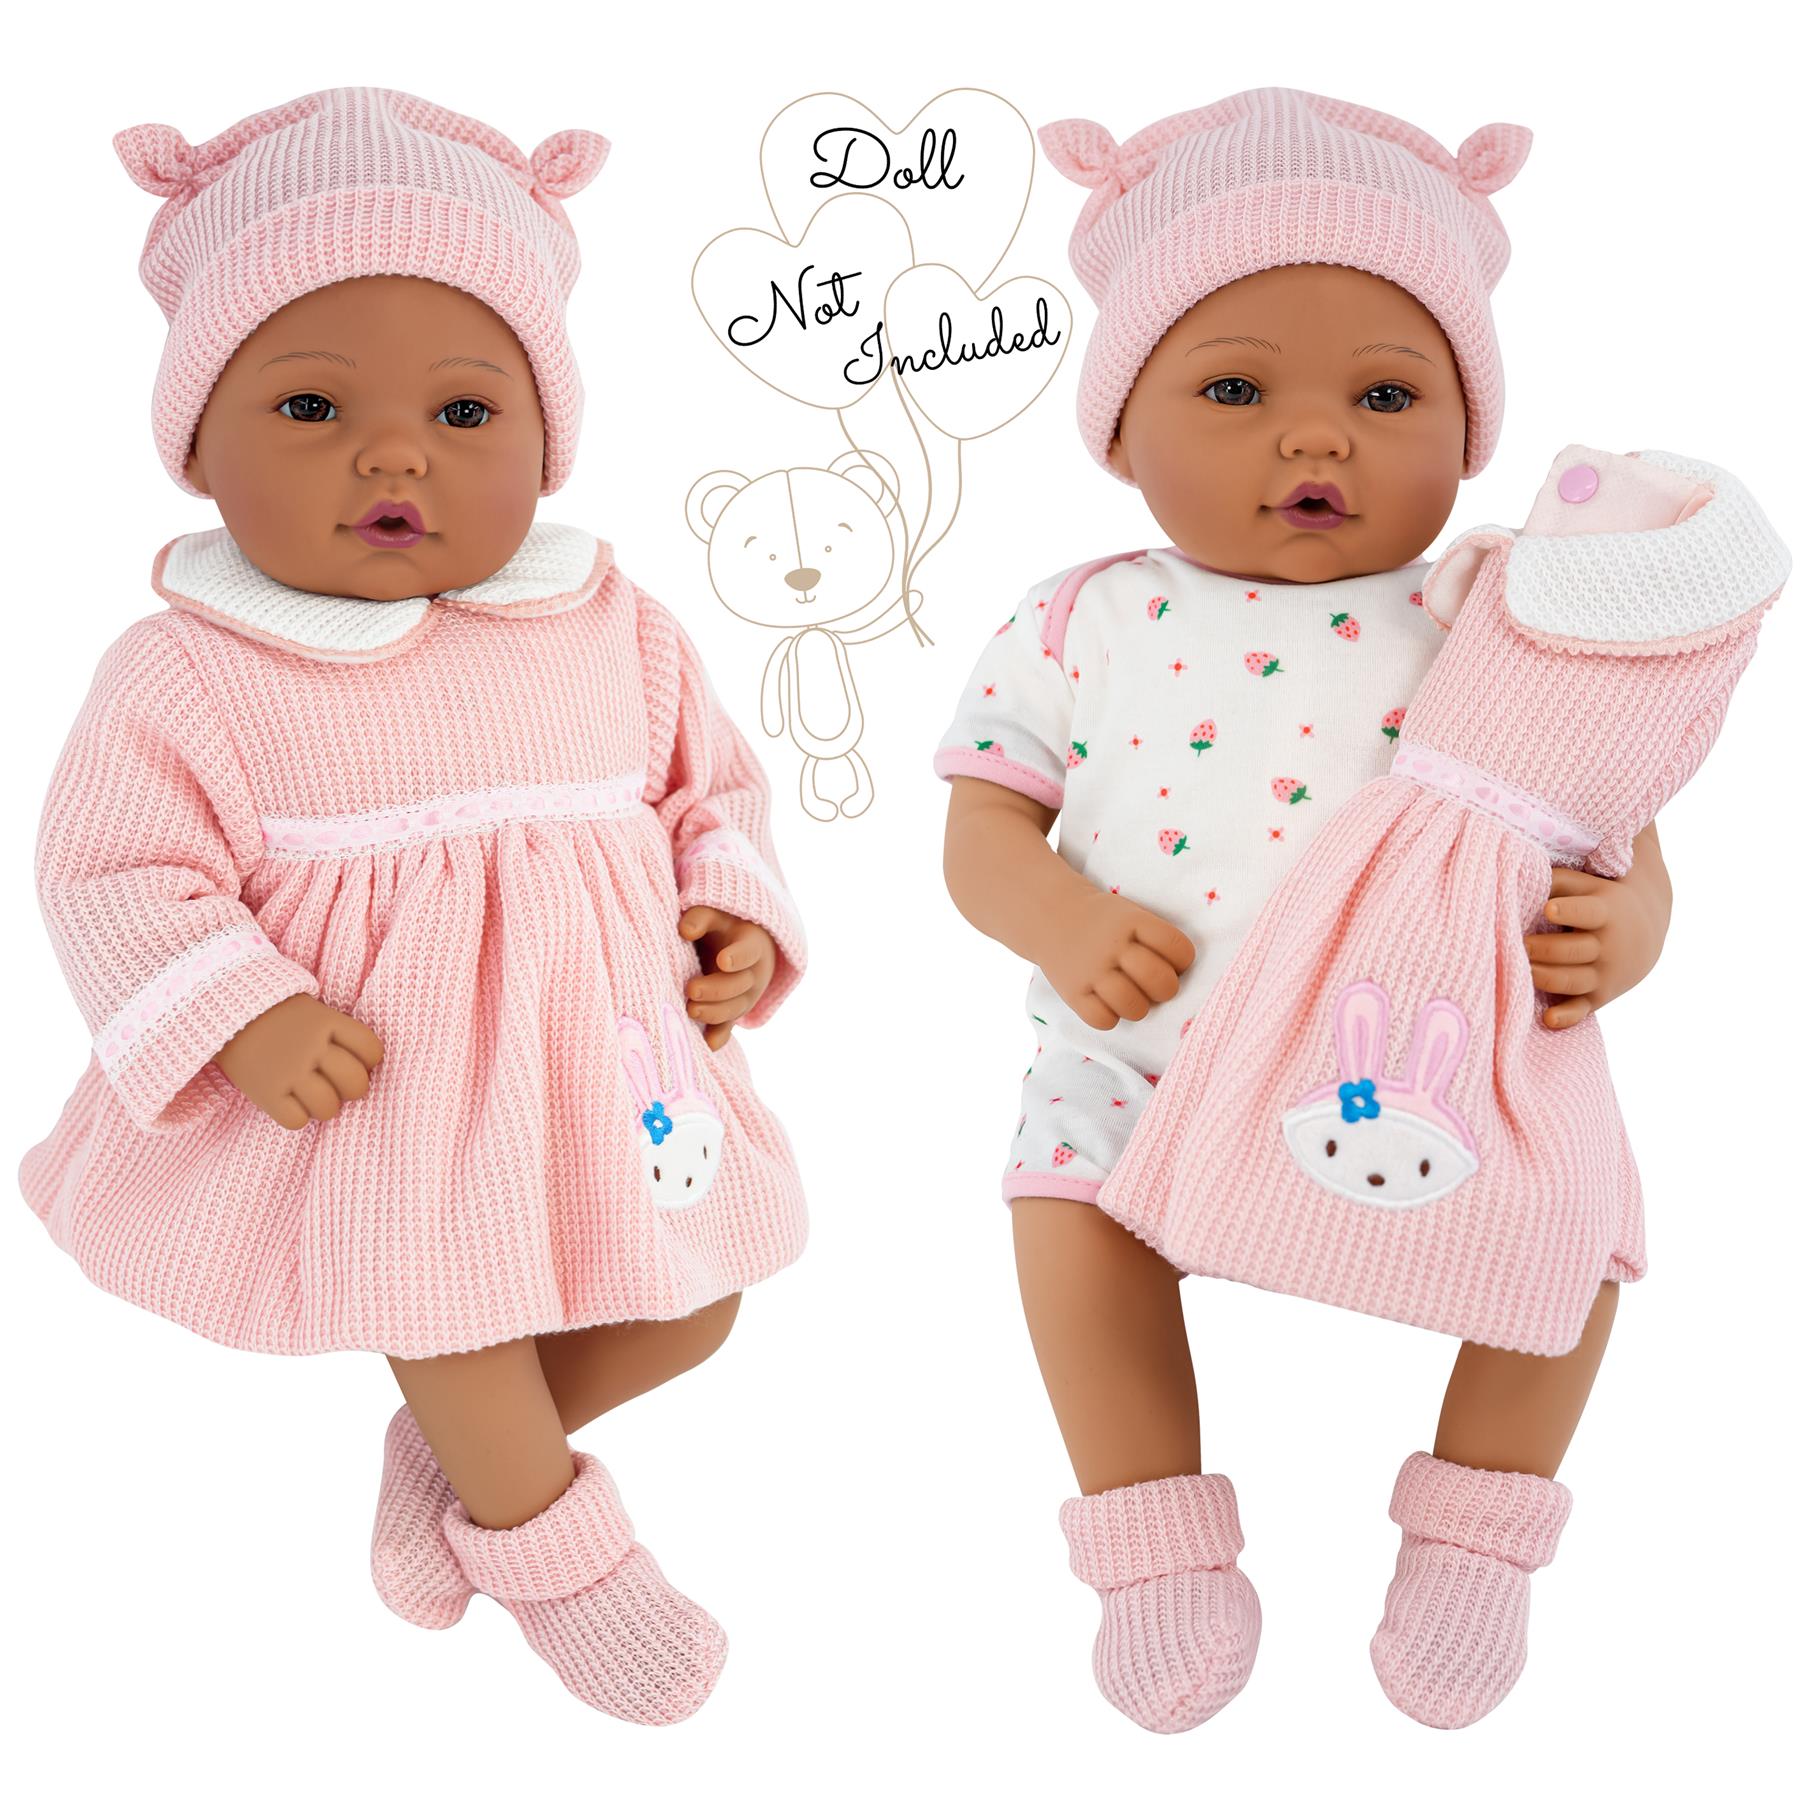 BiBi Outfits - Reborn Doll Clothes (Pink Dress) (50 cm / 20") by BiBi Doll - The Magic Toy Shop